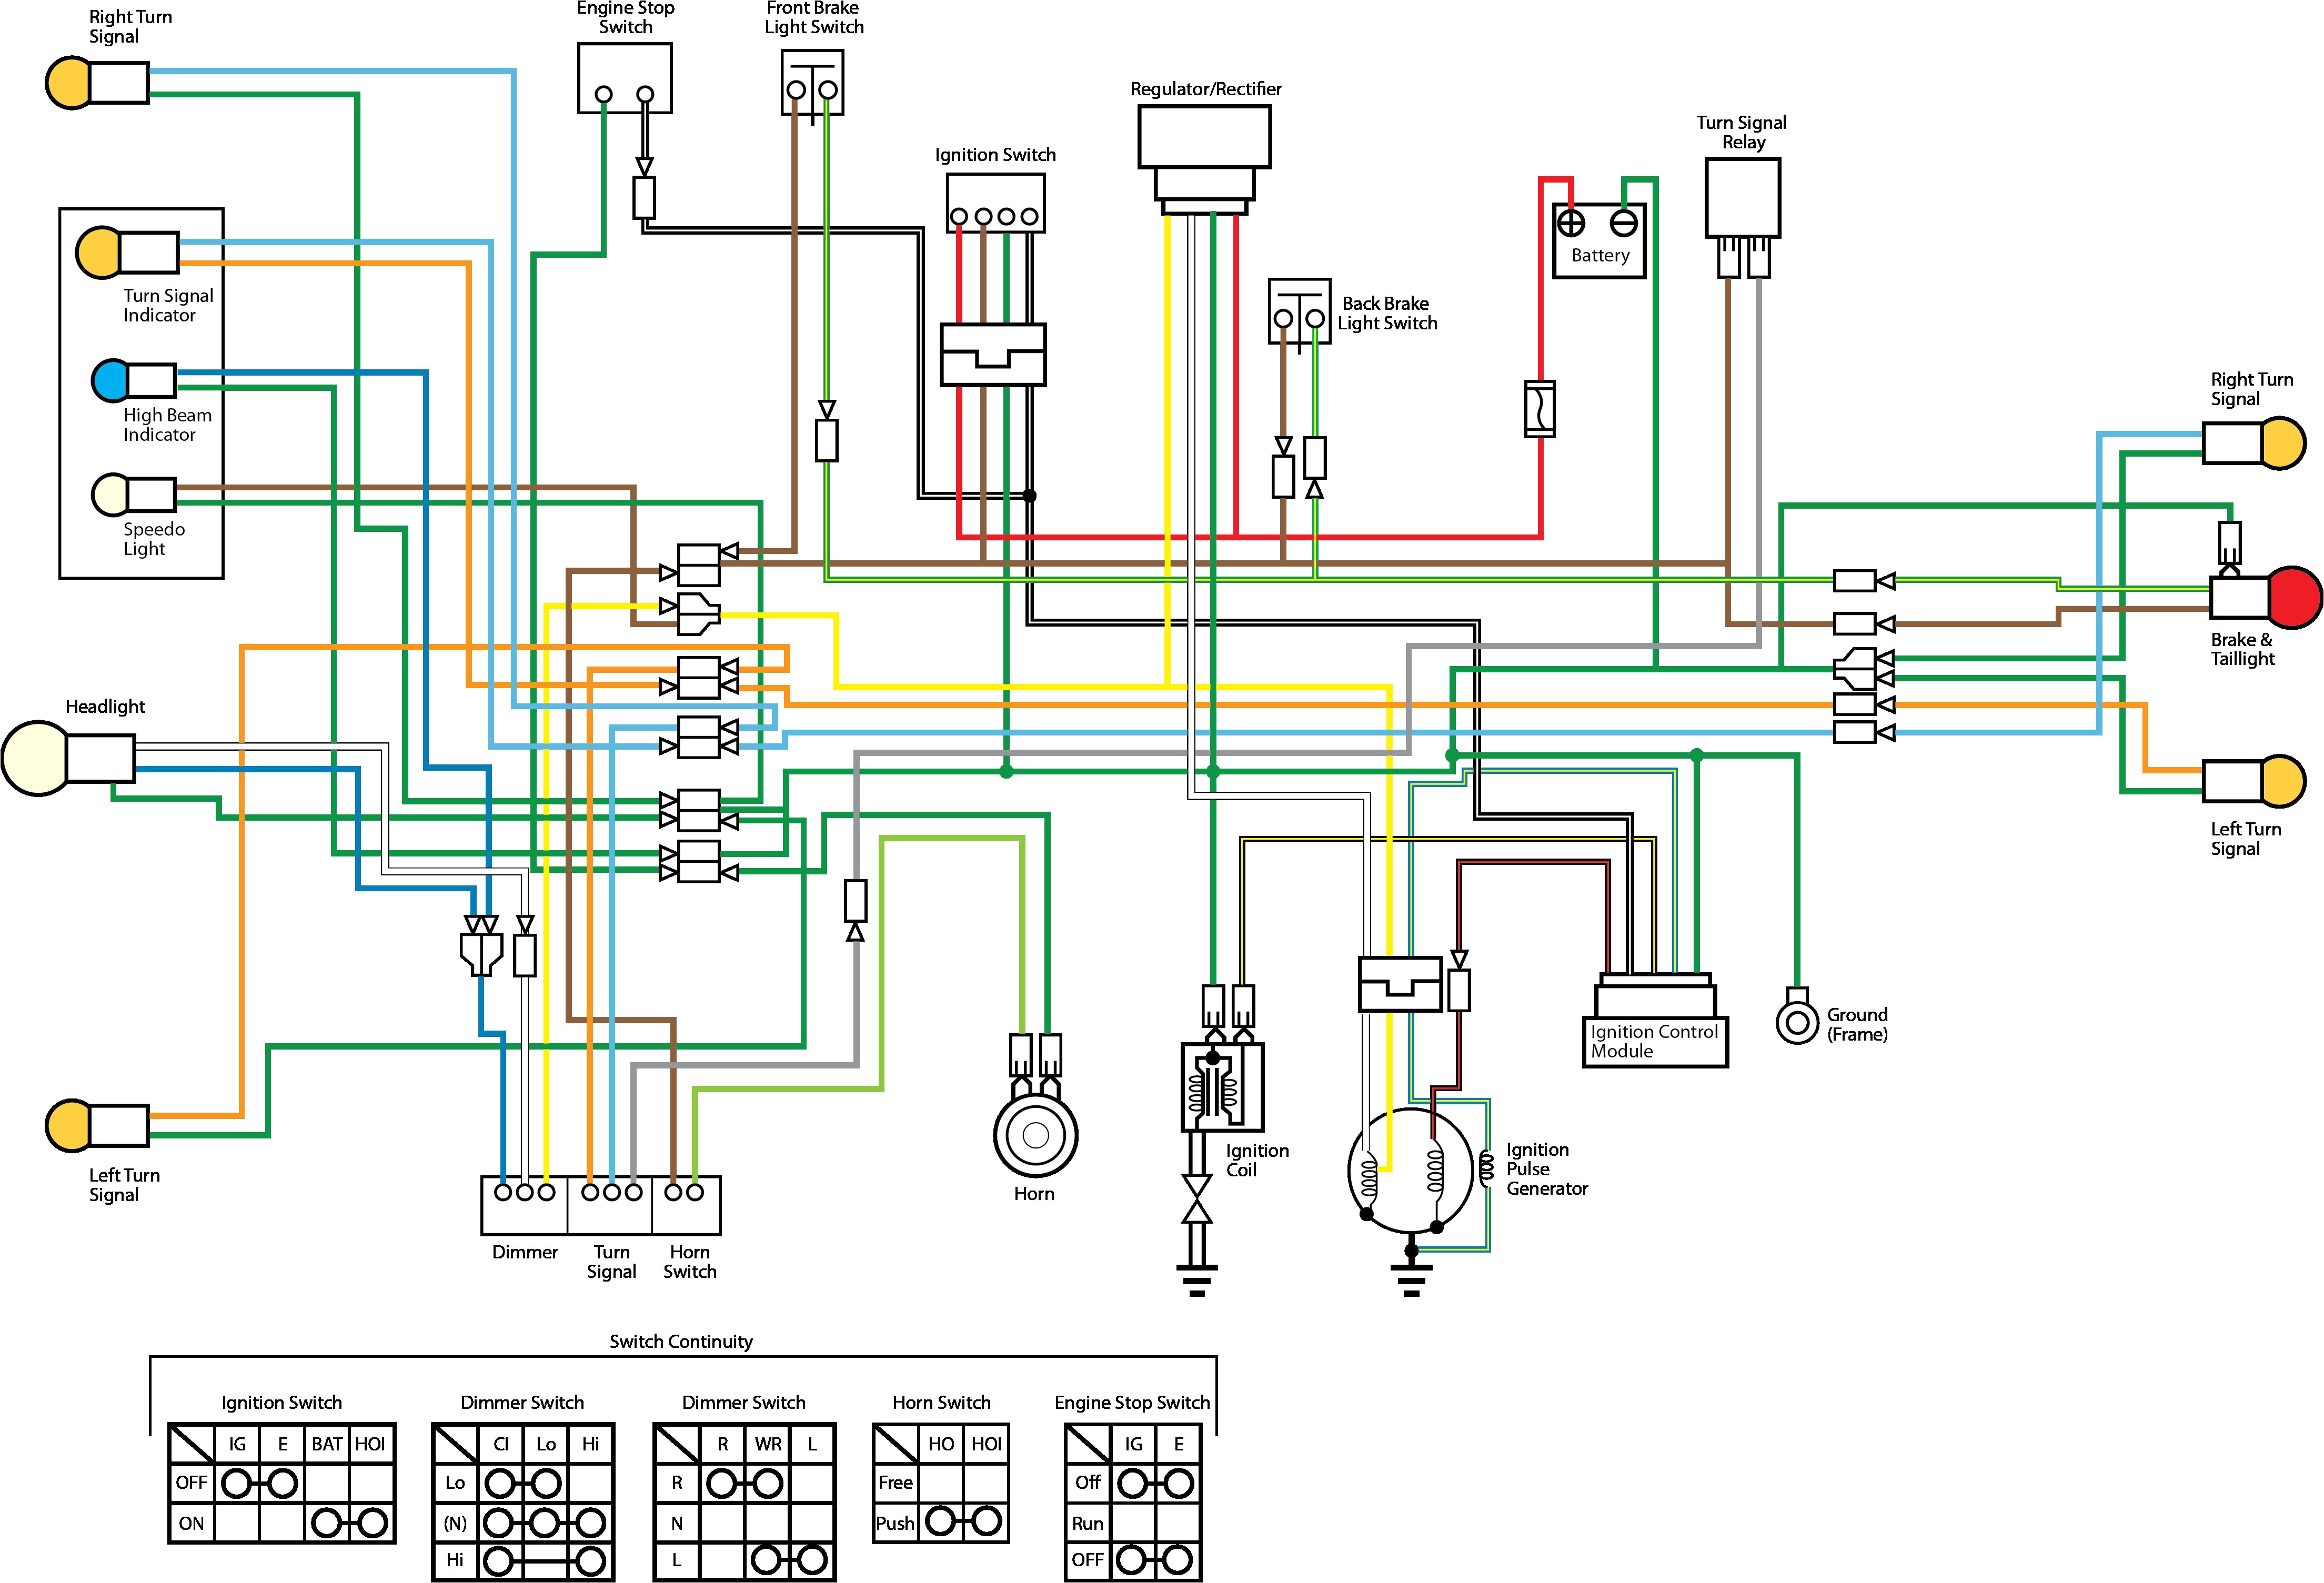 amor 50cc wiring diagram wiring diagram site 50cc wiring diagram wiring diagrams konsult amor 50cc wiring